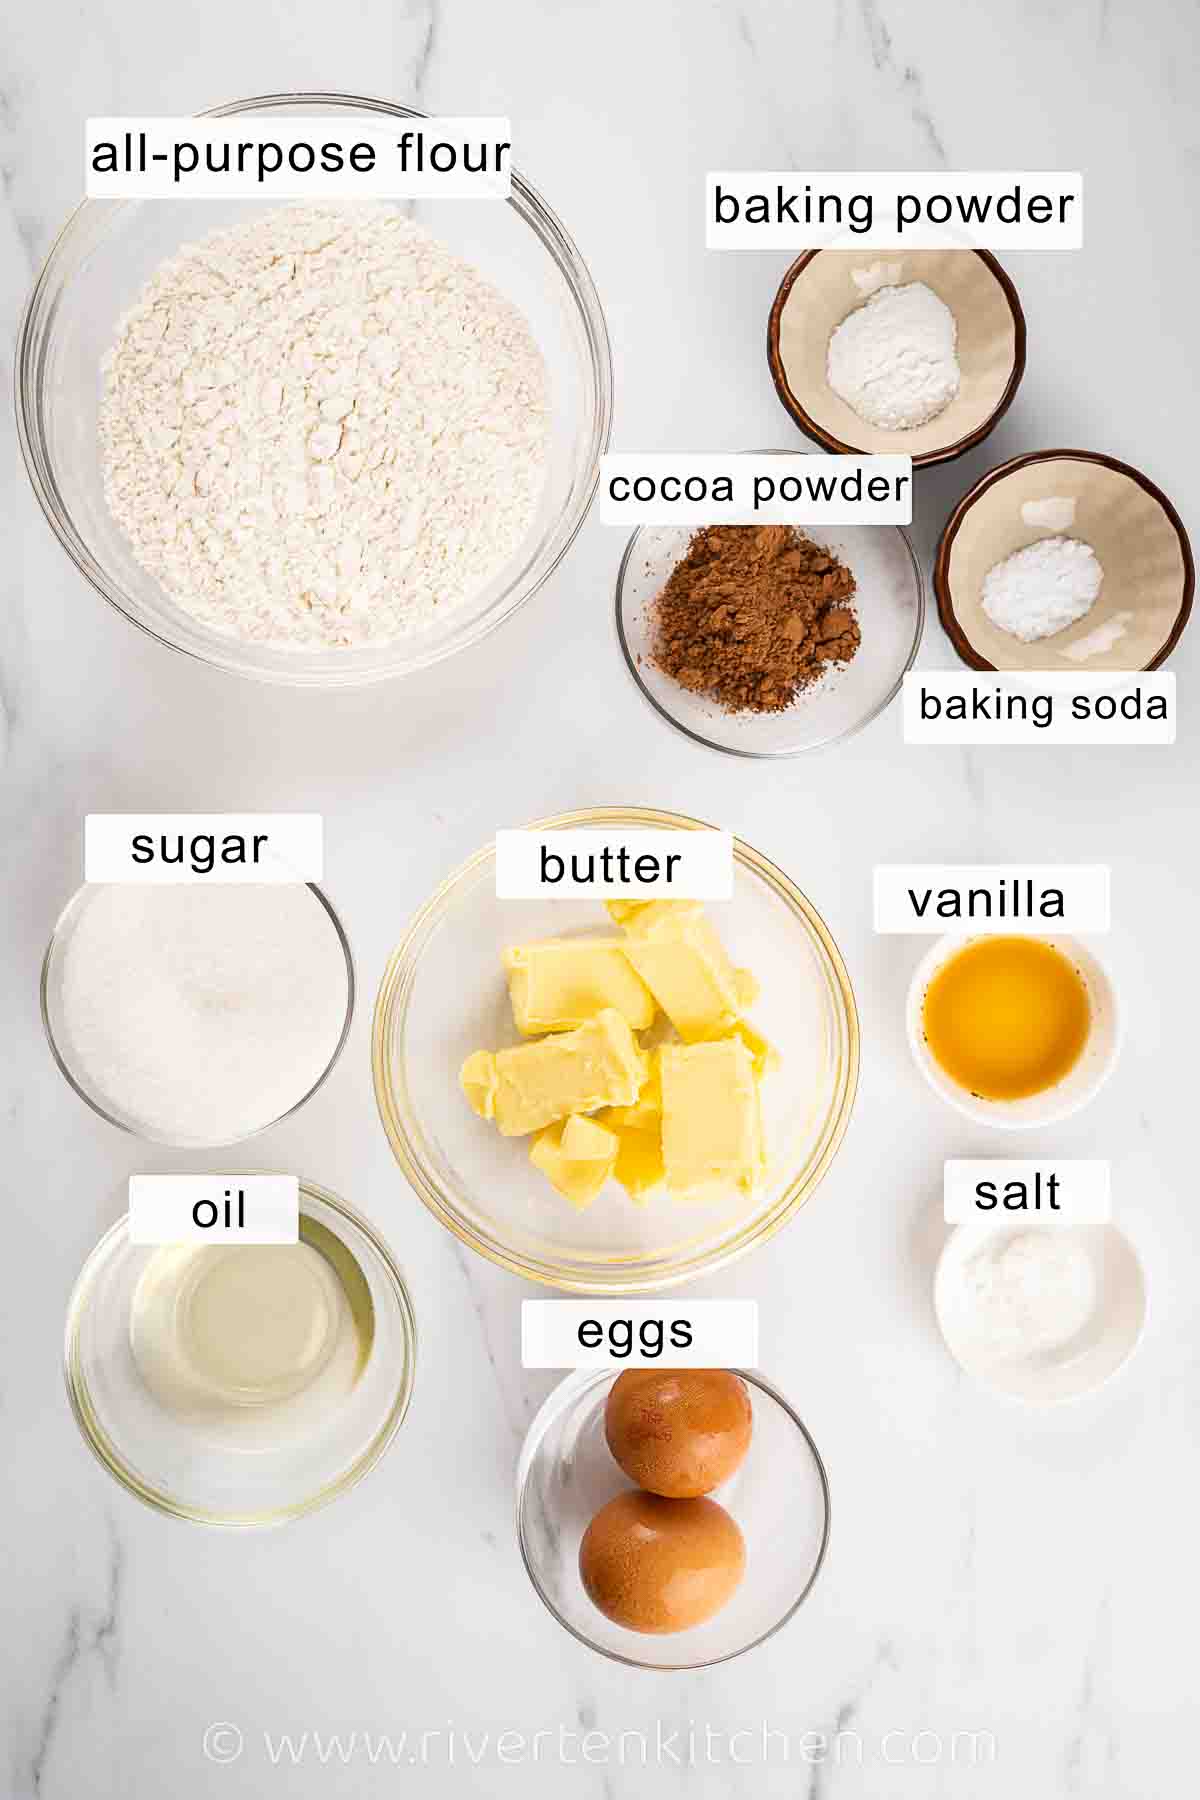 flour, cocoa powder, eggs, baking powder, baking soda, oil, sugar